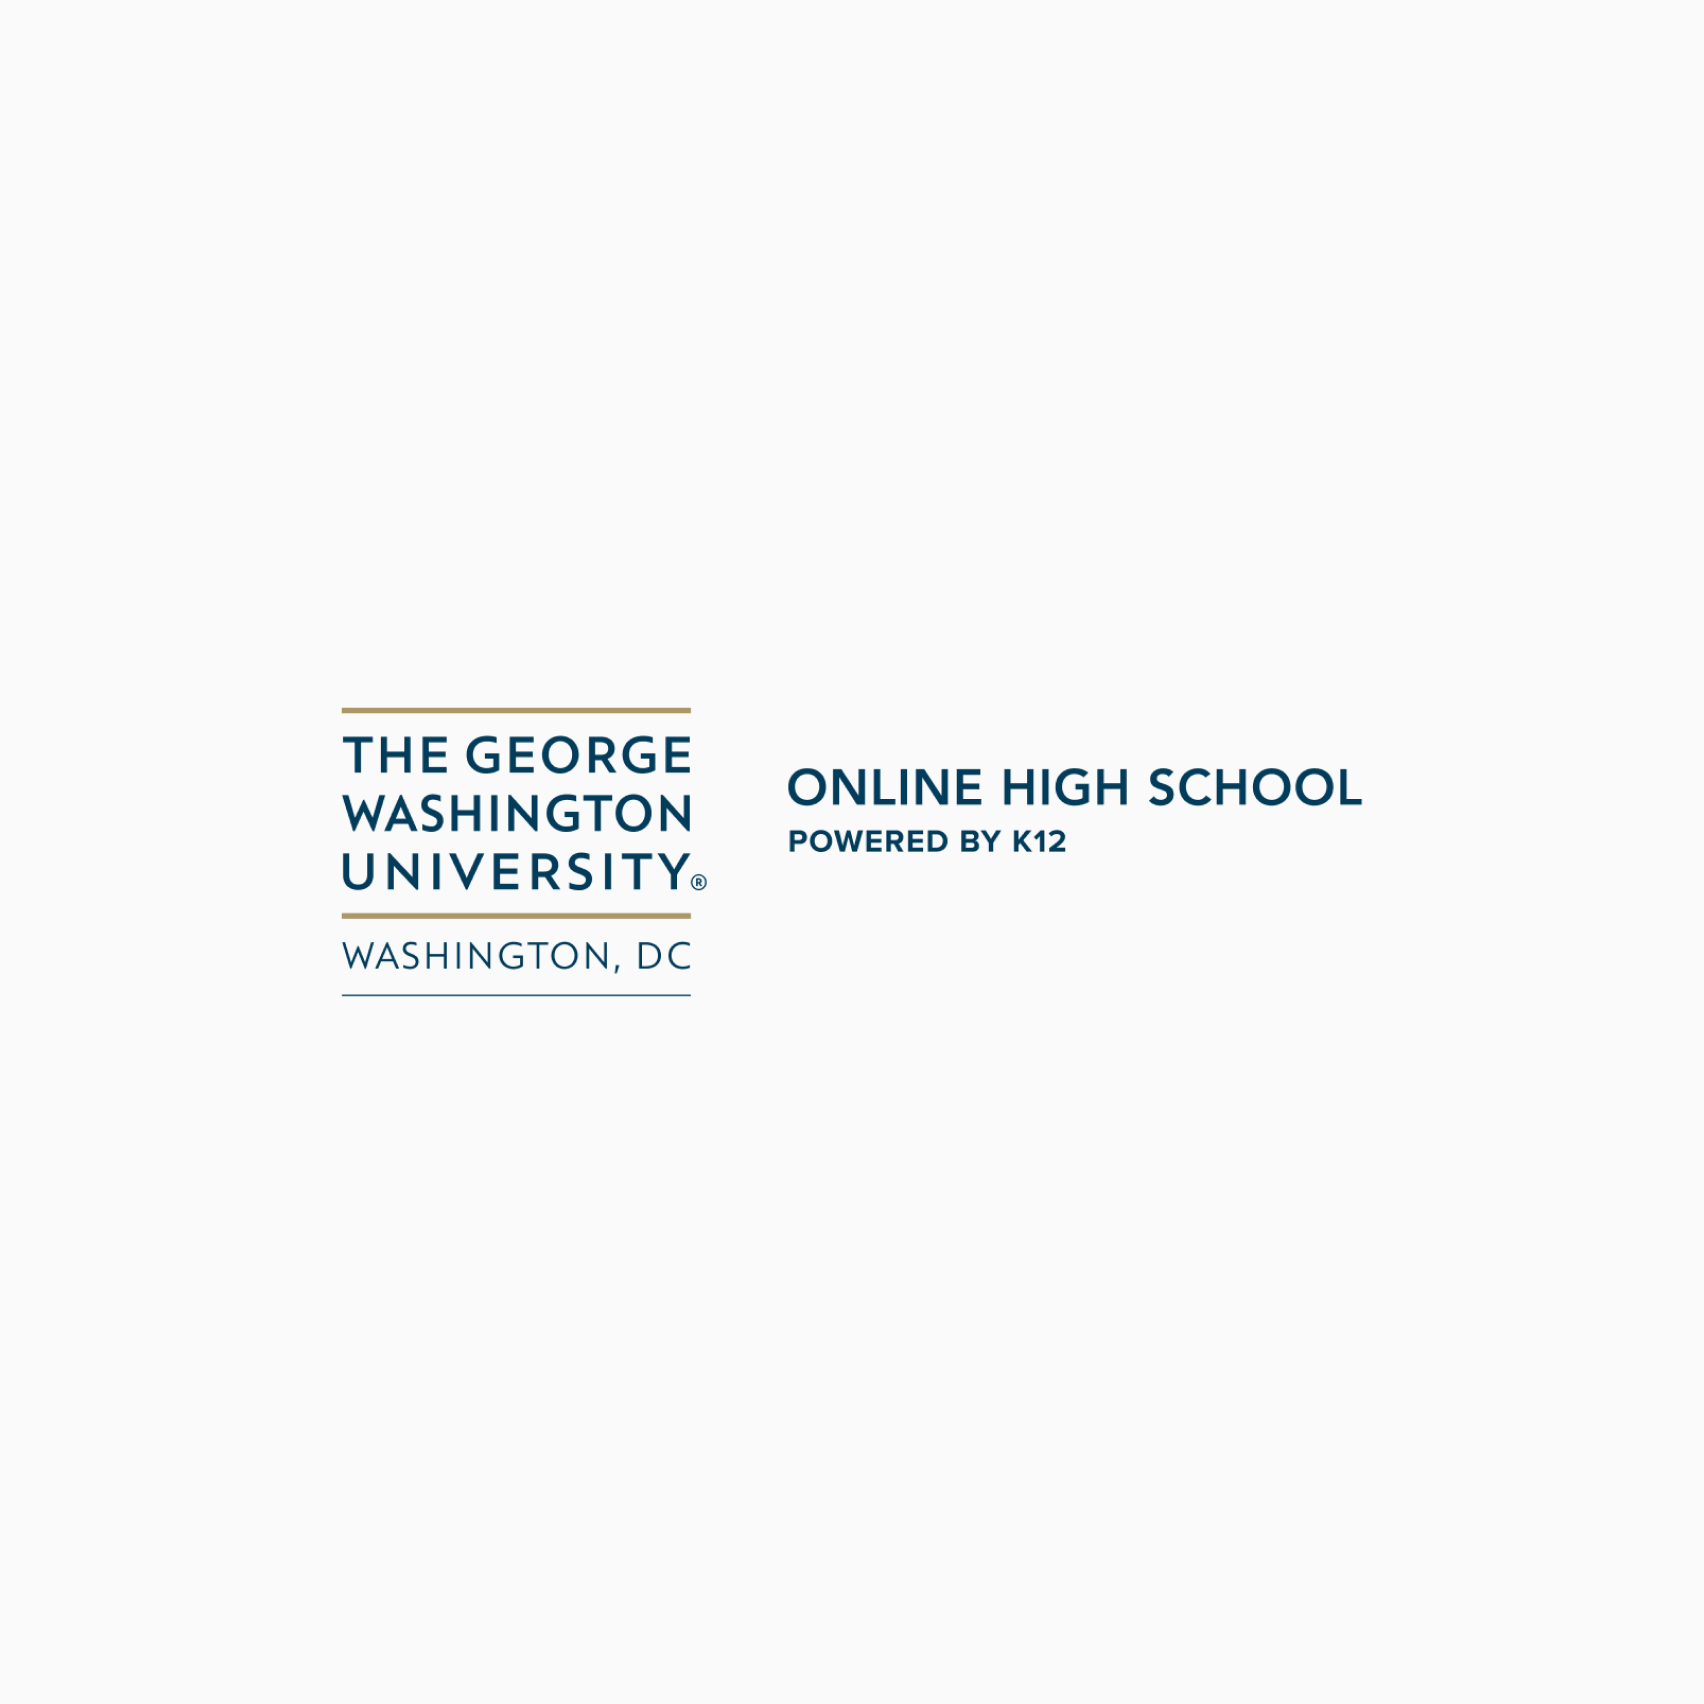 Online Private Schools image 13 (name George Washington)